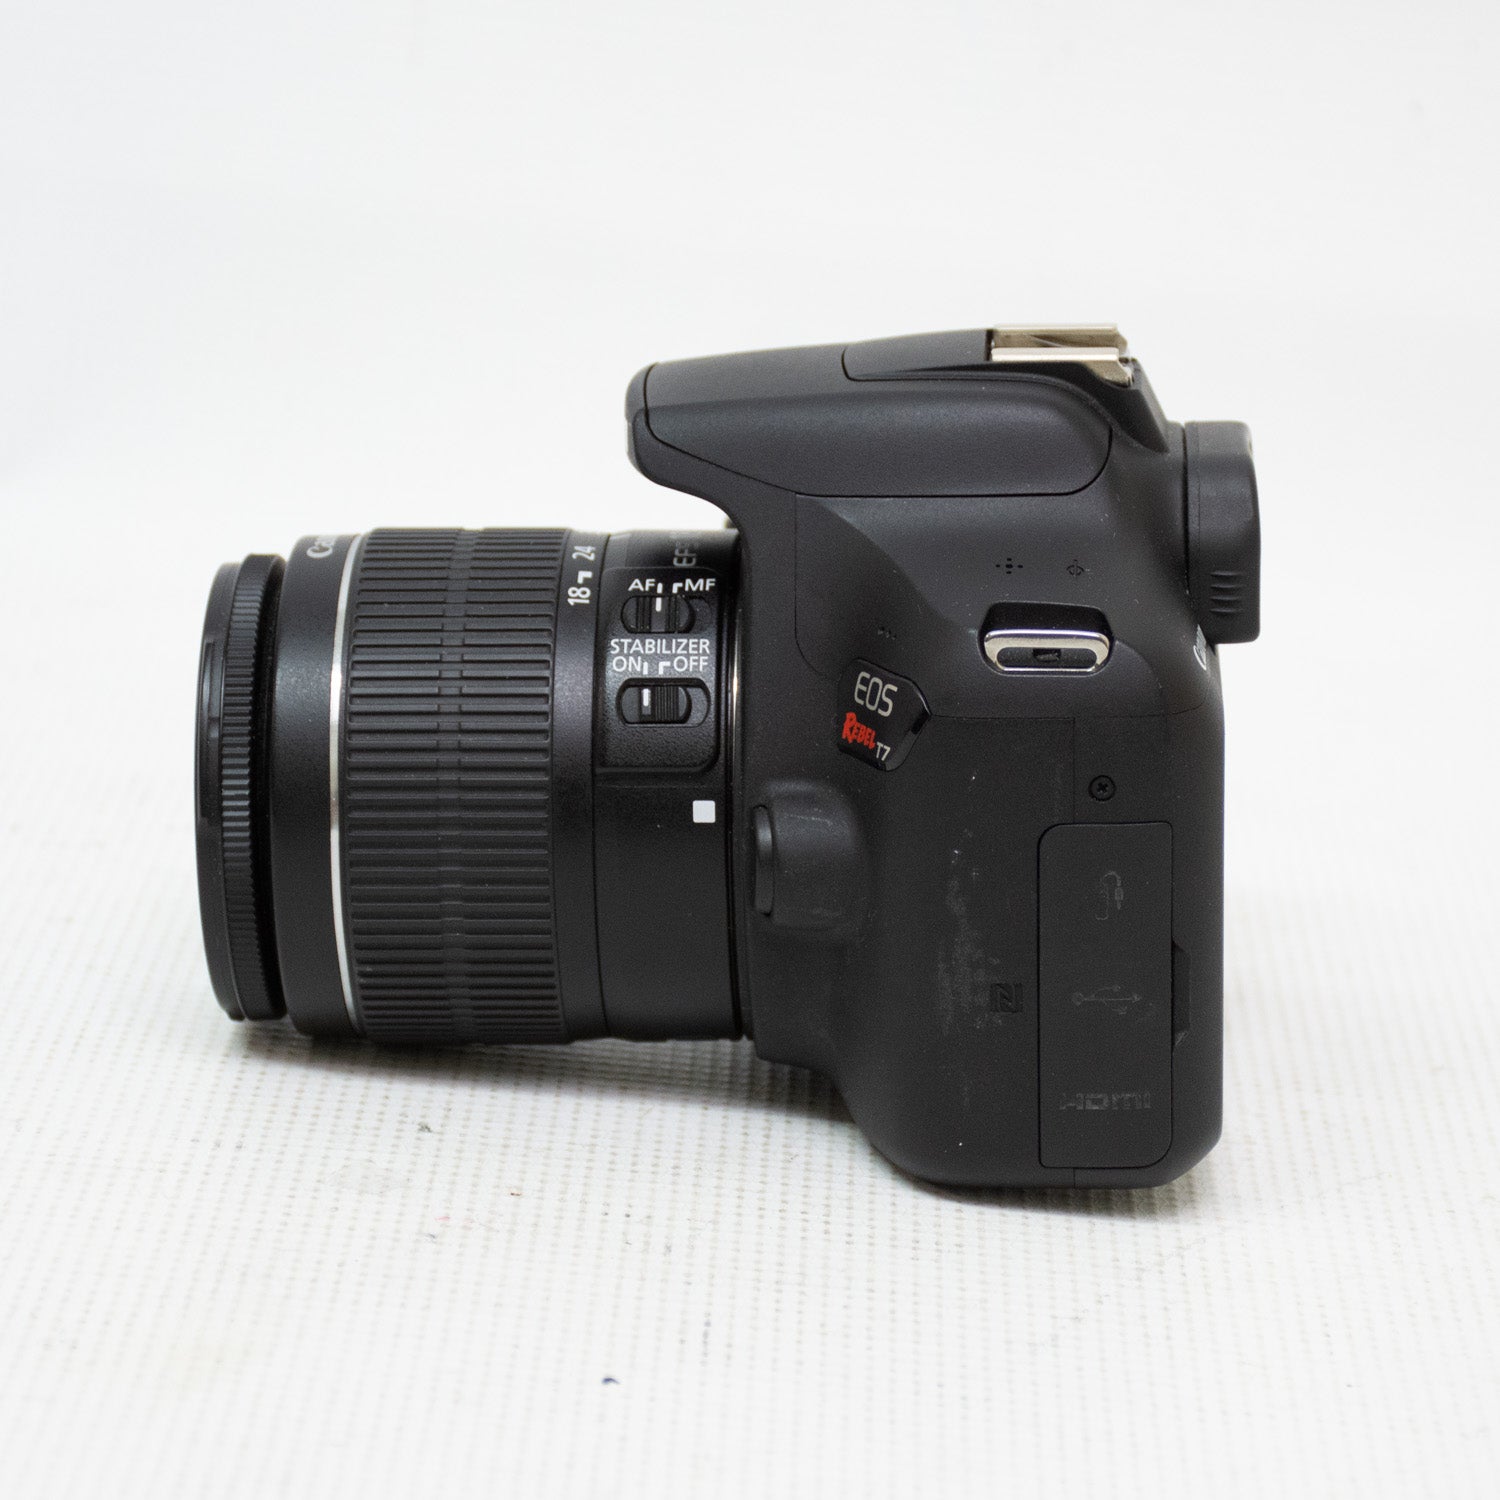 Canon Rebel T7 DSLR Camera w/ 18-55mm Lens